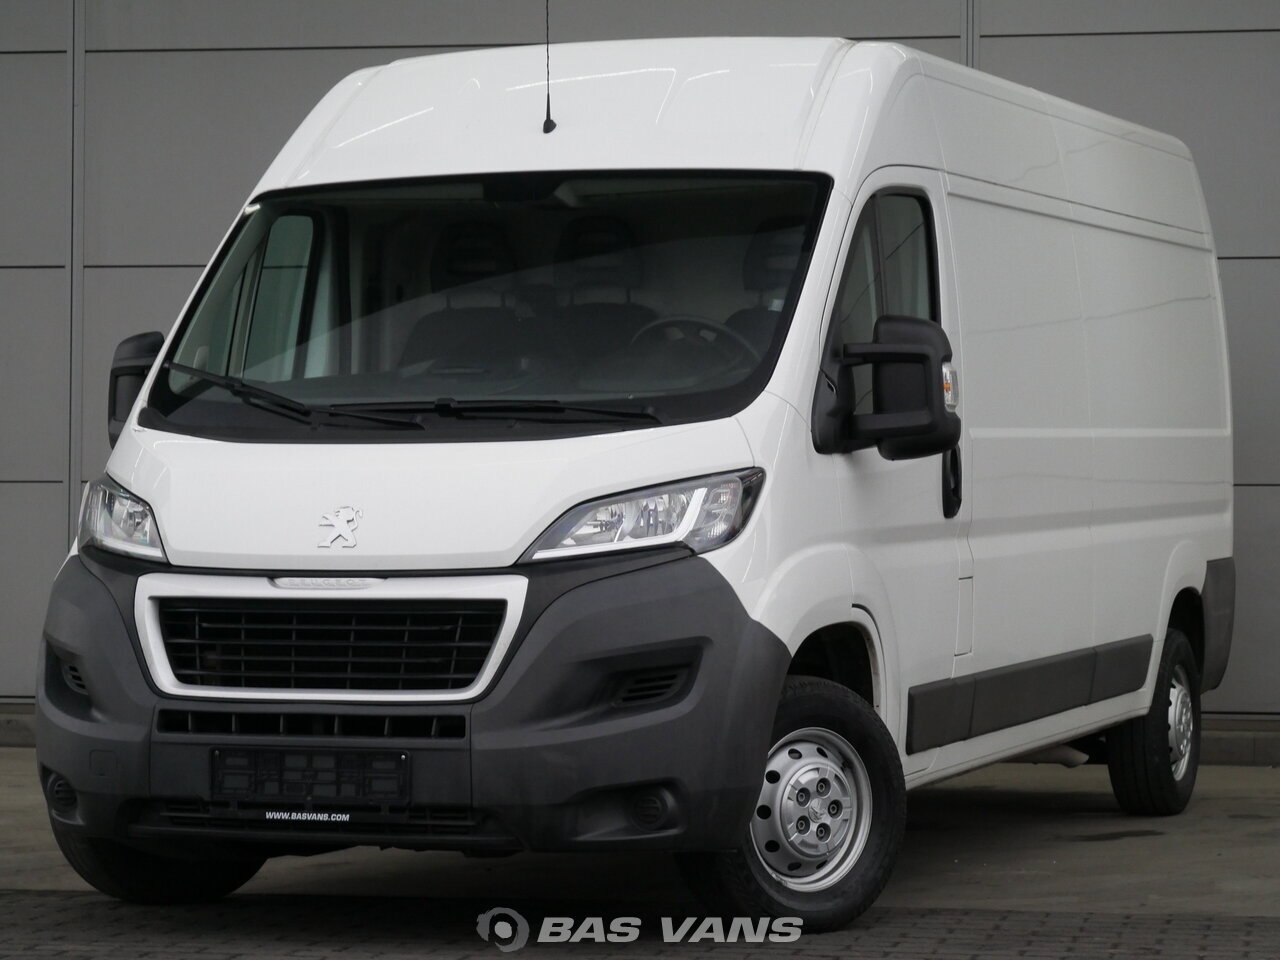 Light commercial vehicle - BAS Vans